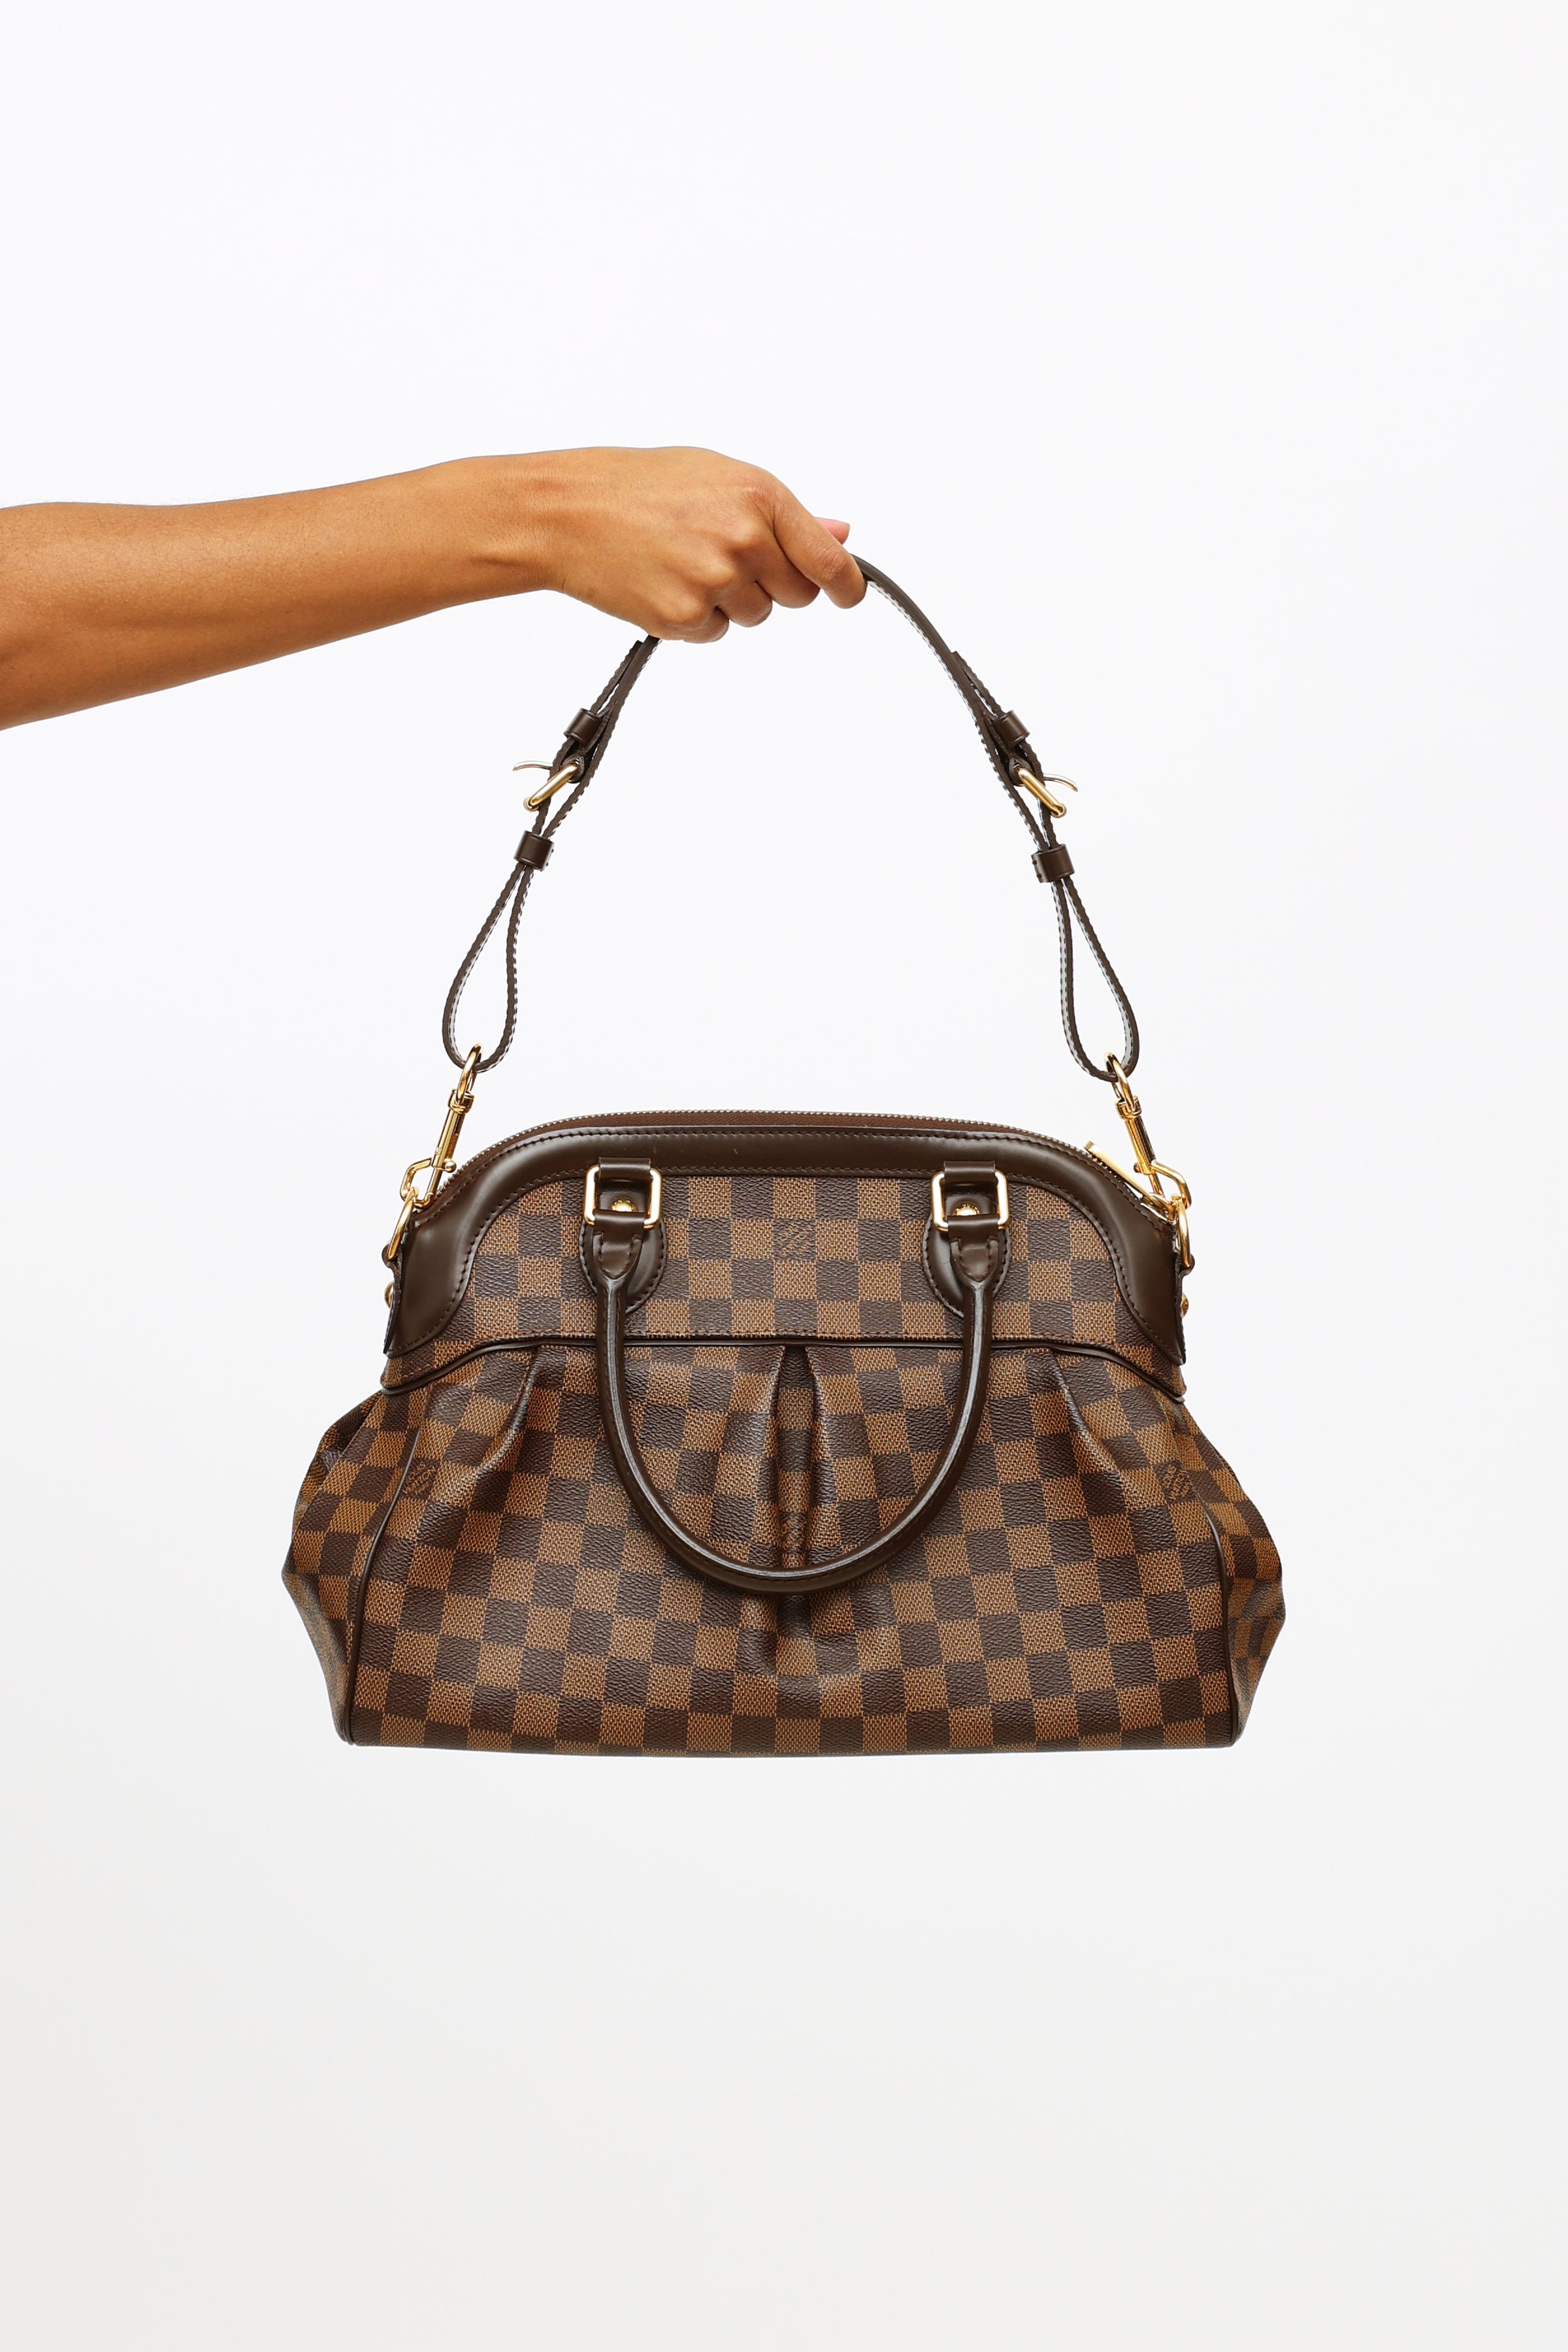 Louis Vuitton Damier Ebene Canvas And Leather Trevi Pm Bag